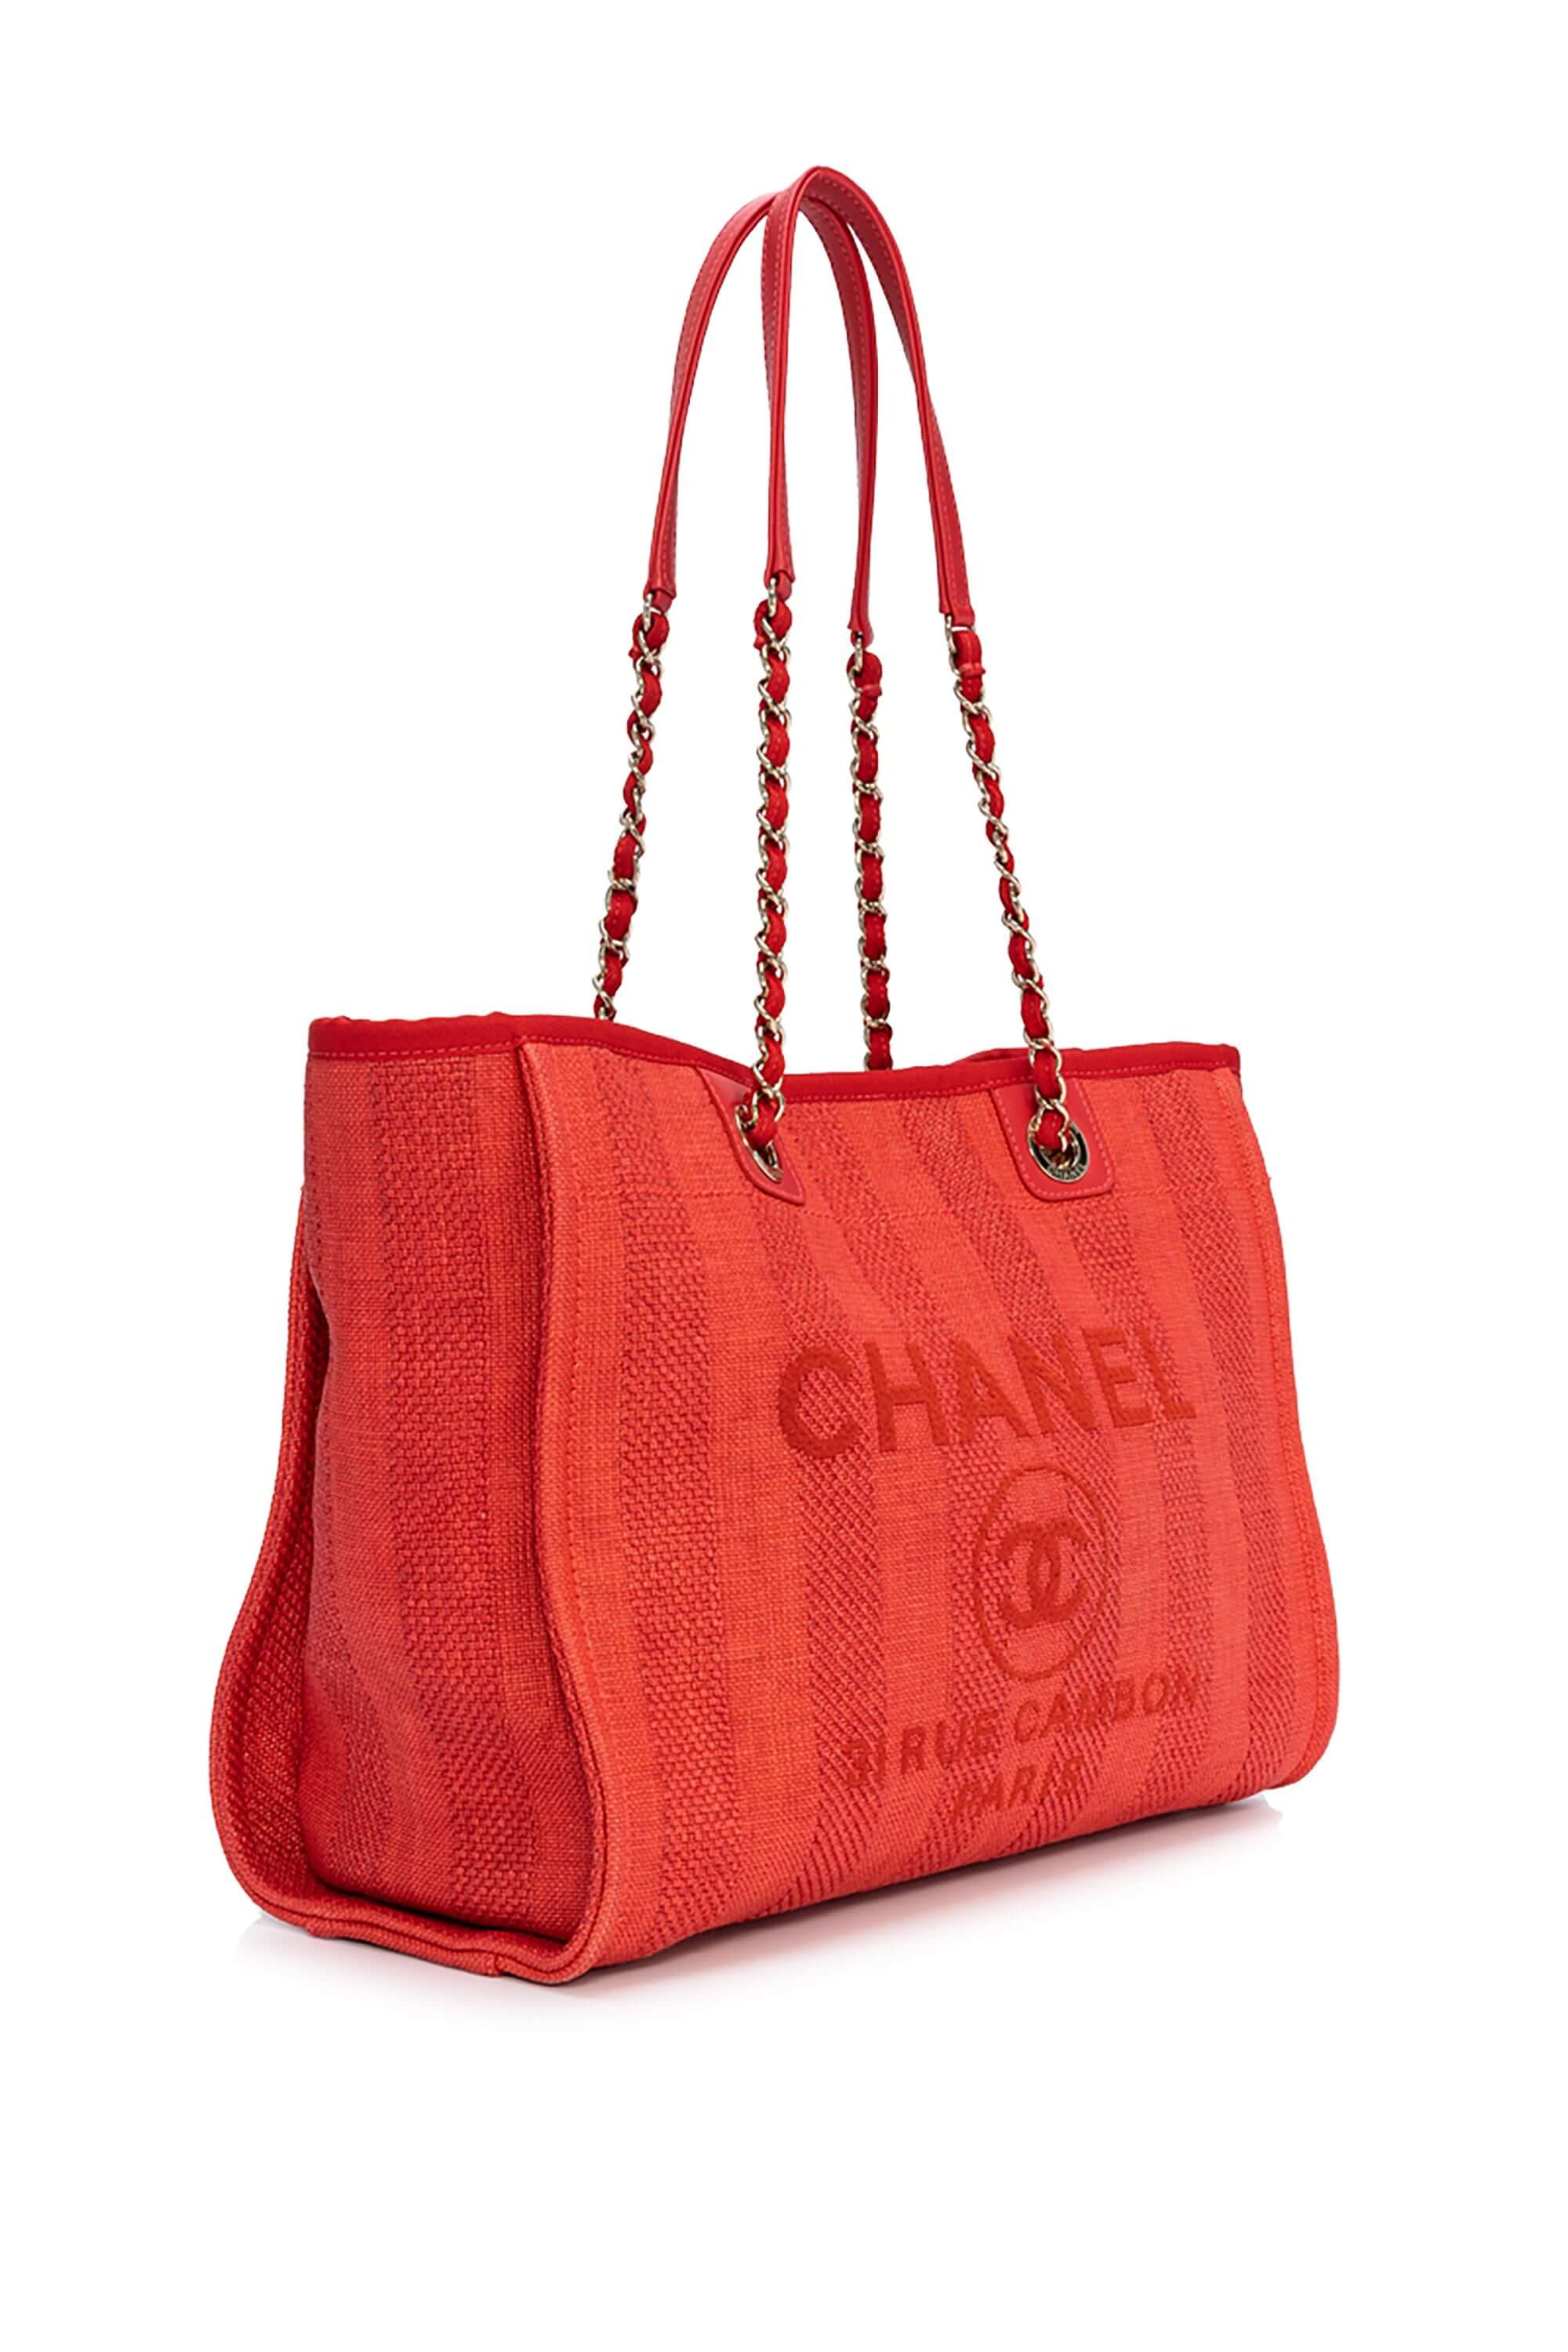 Purse Organizer for CC Deauville Canvas Designer Handbags 